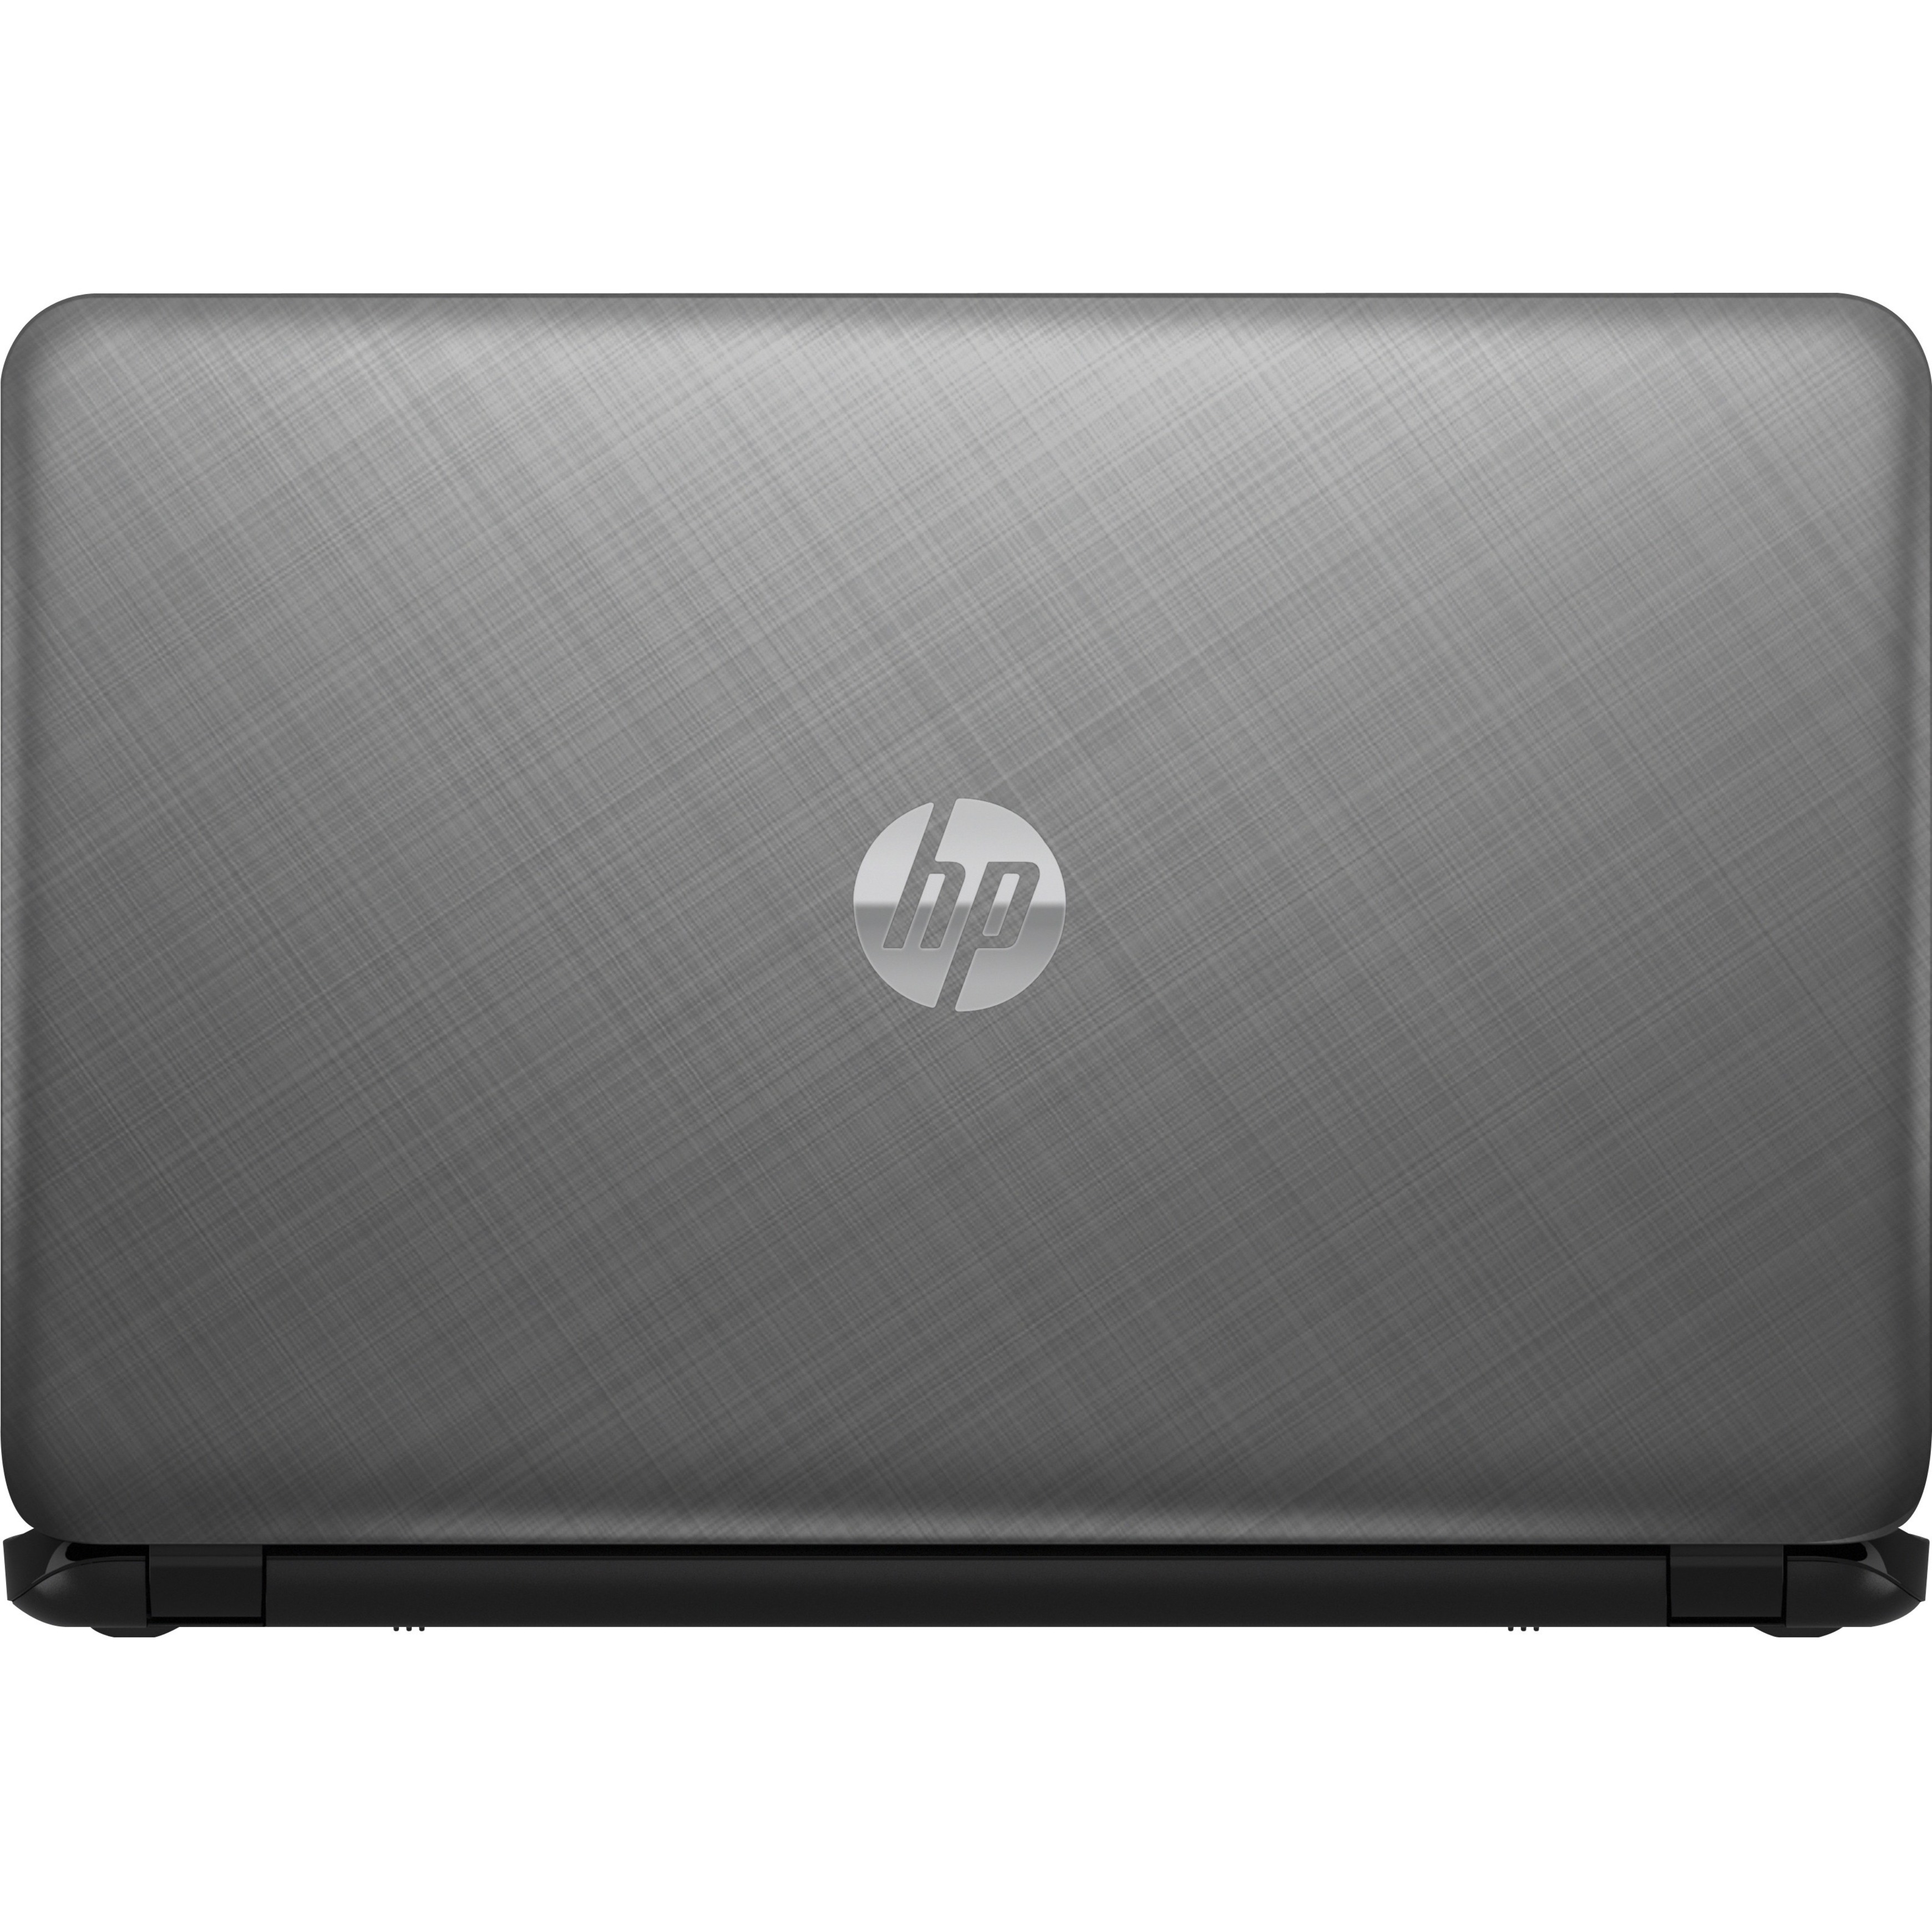 Restored HP TouchSmart 15.6" Touchscreen Laptop, AMD A-Series A8-6410, 4GB RAM, 750GB HD, DVD Writer, Windows 8.1, Black Licorice, 15-g059wm (Refurbished) - image 5 of 7